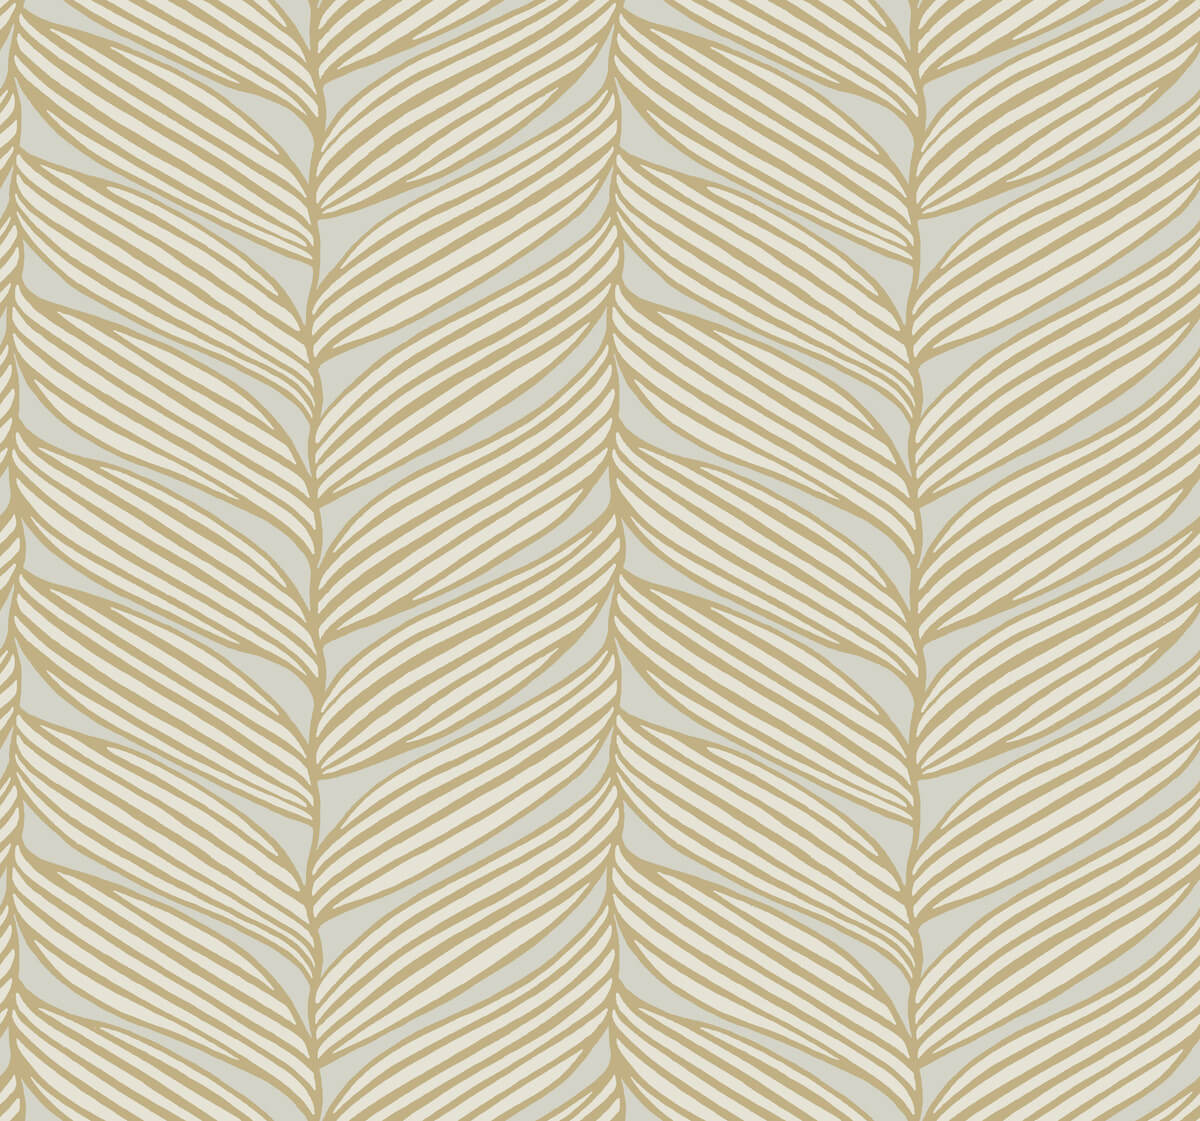 Antonina Vella Modern Metals Second Edition Luminous Leaves Wallpaper - Neutral & Gold